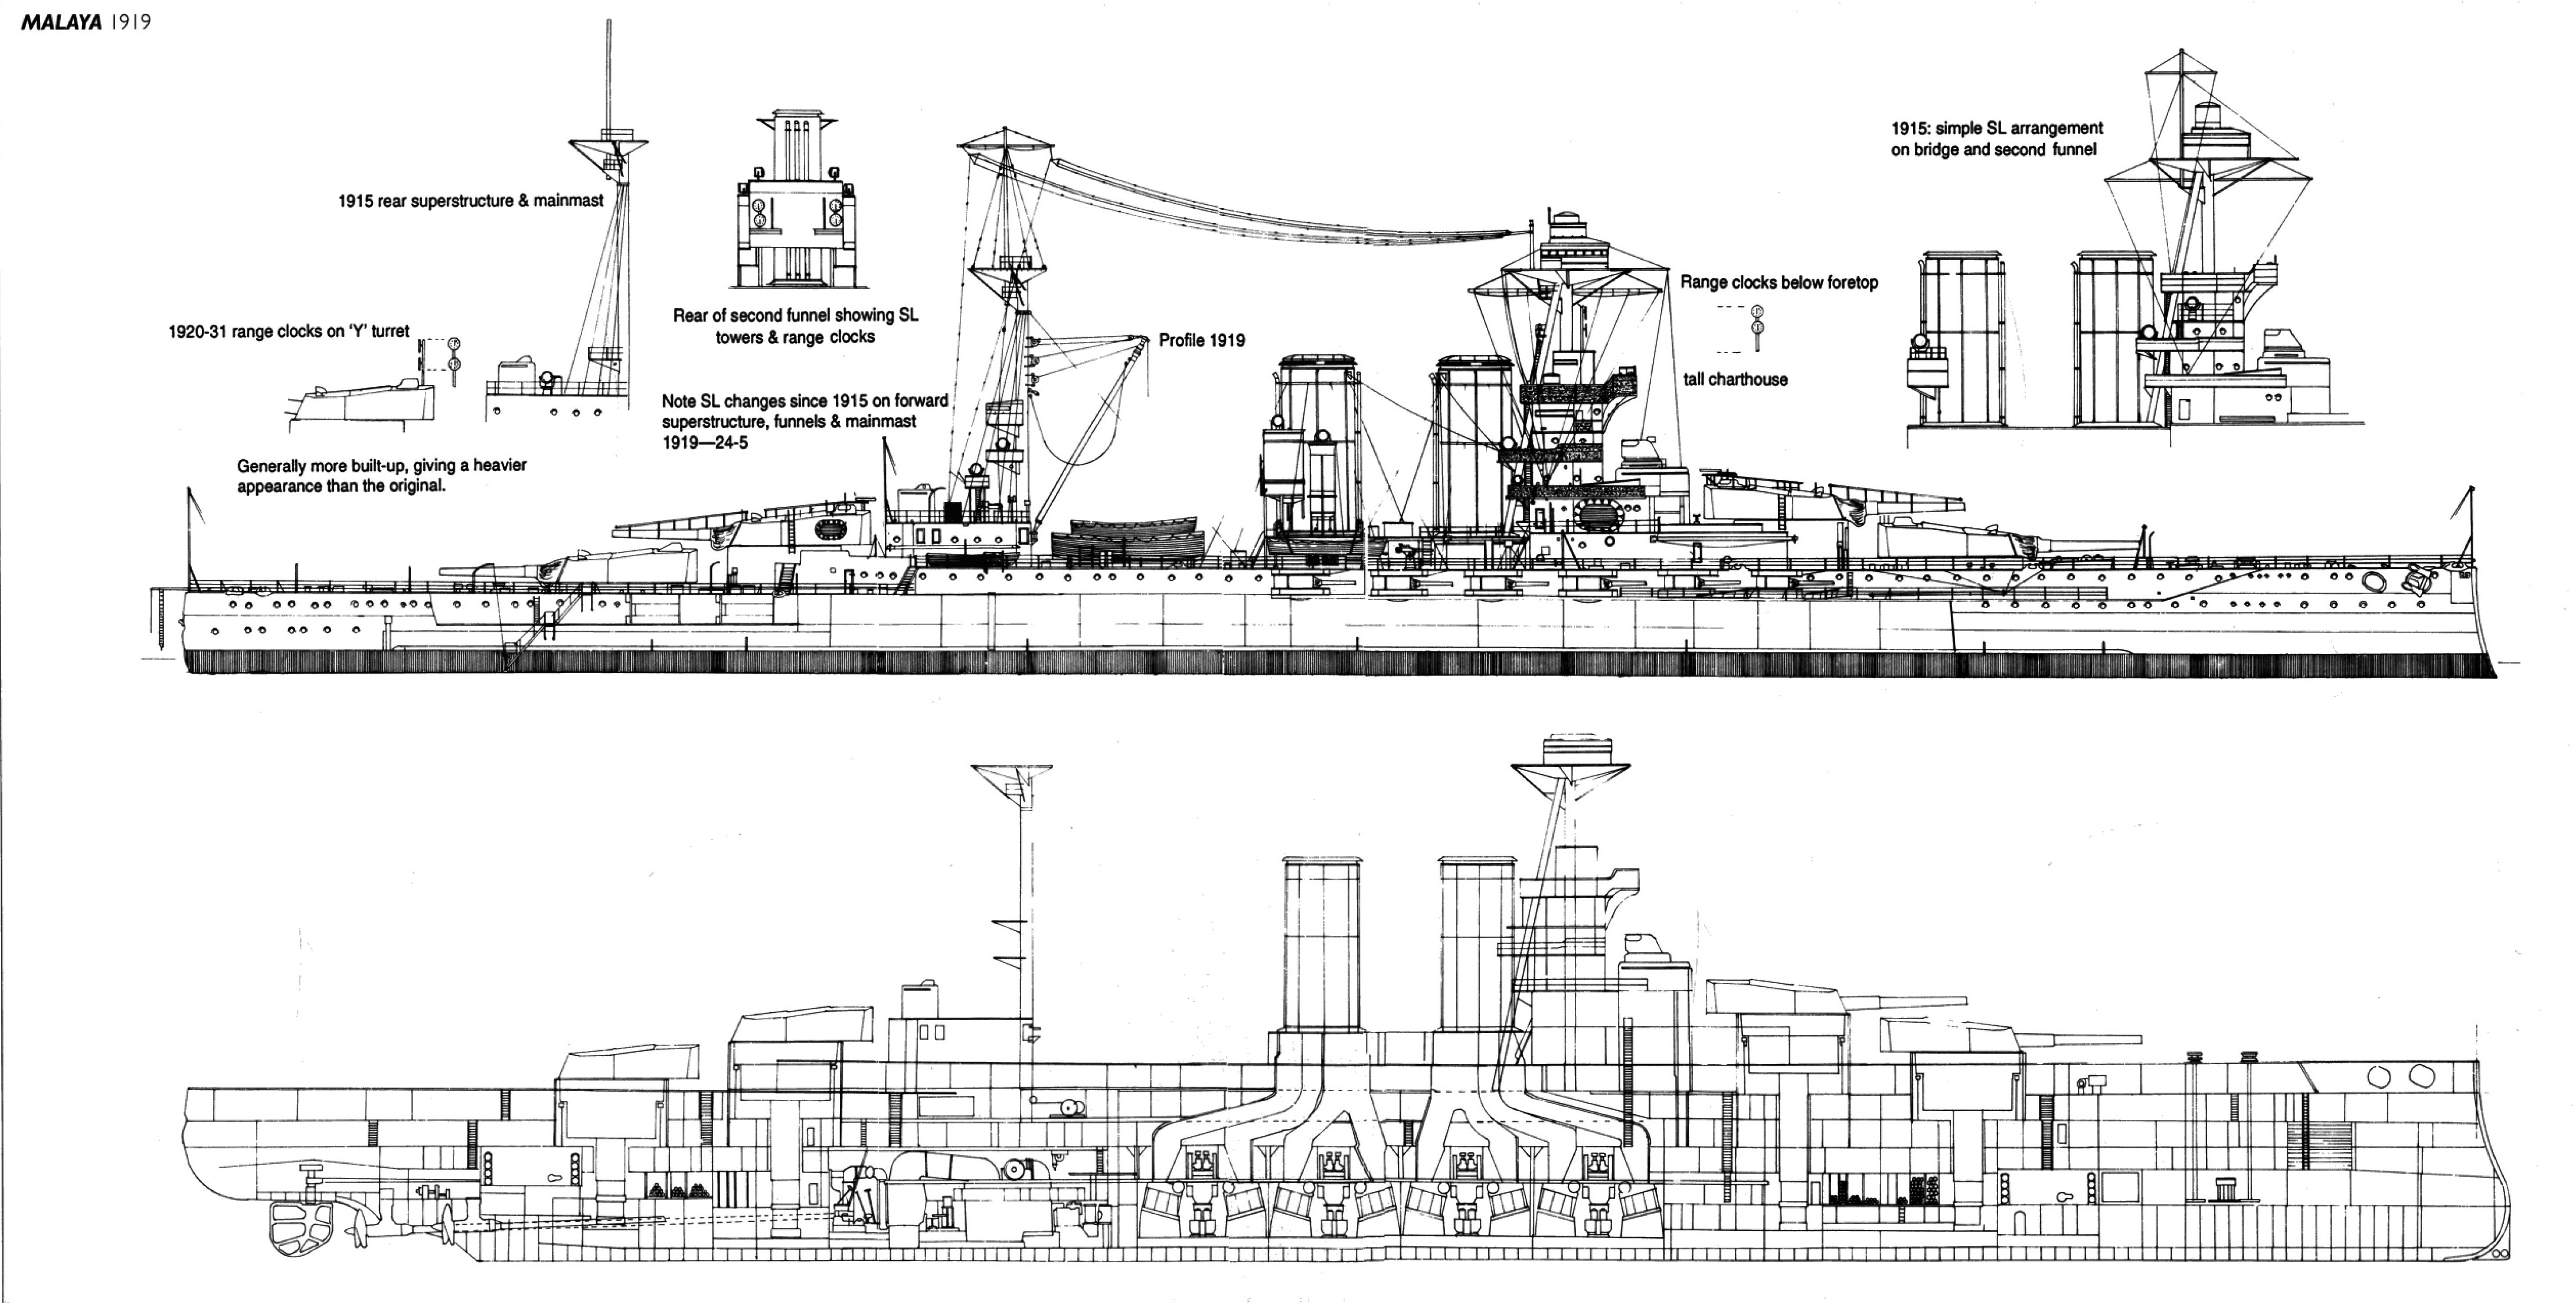 HMS Malaya.jpg